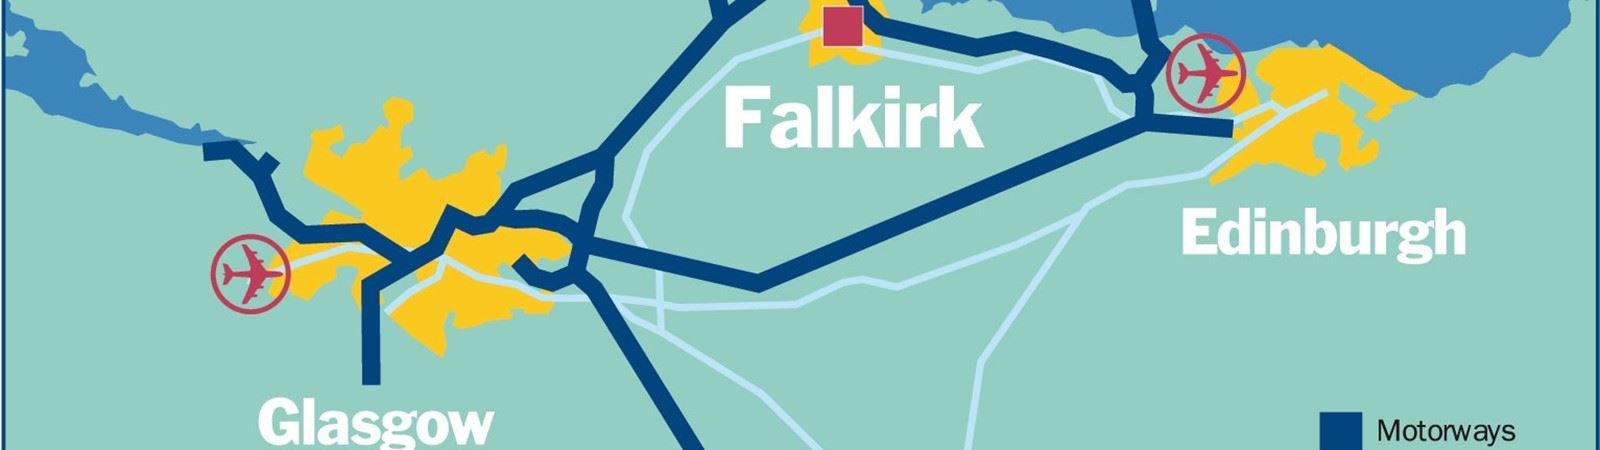 Falkirk from Edinburgh and Glasgow